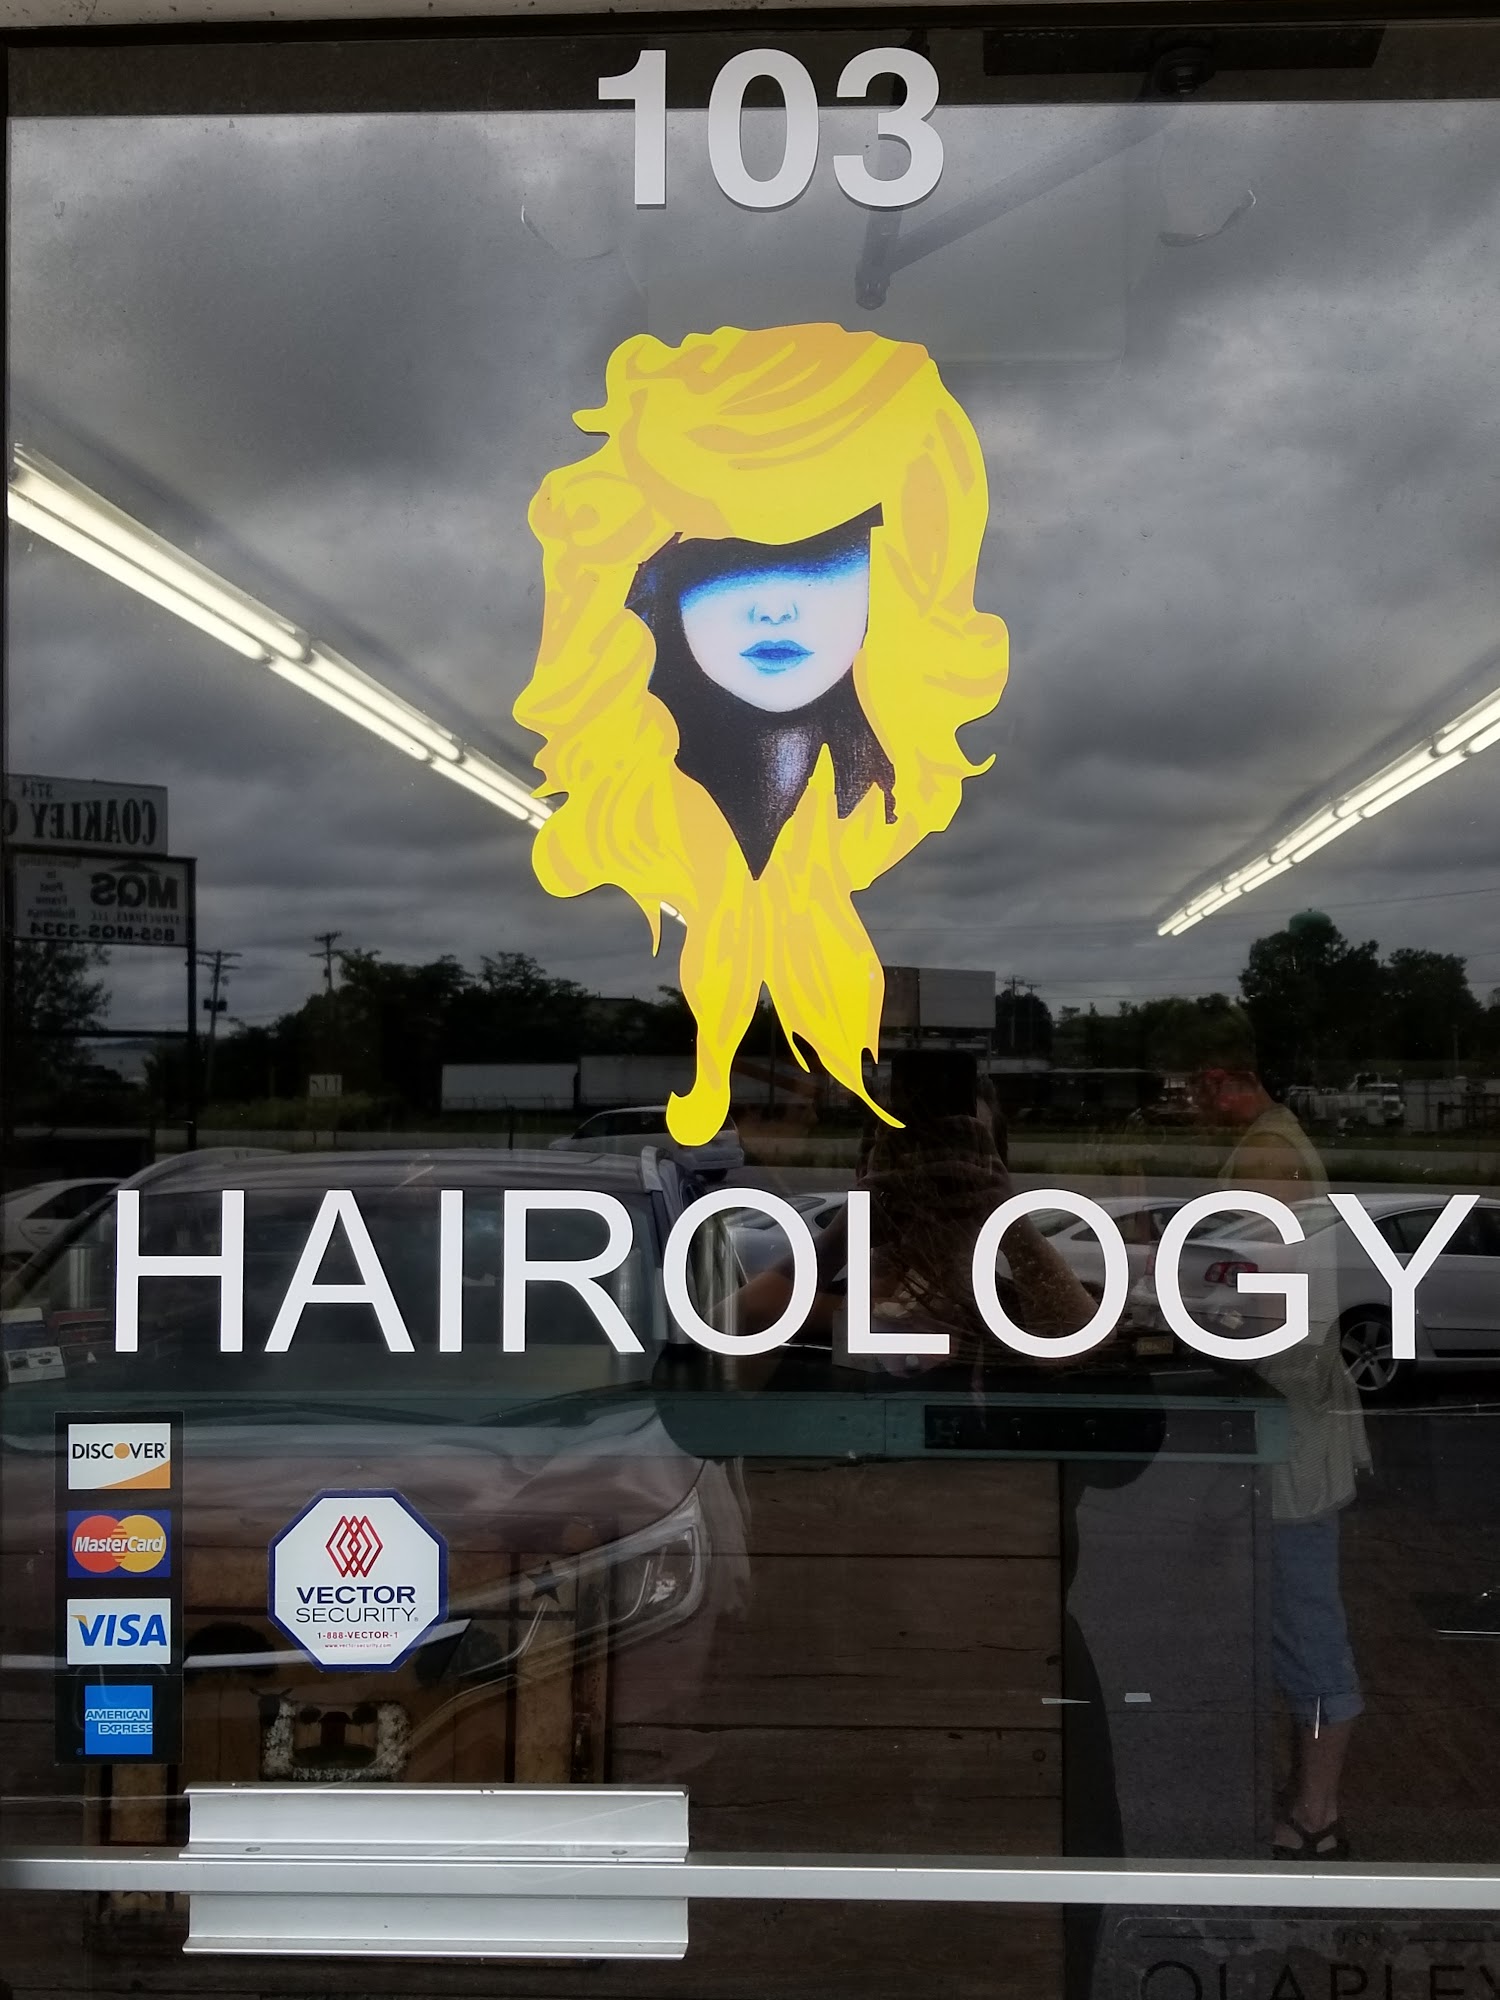 Hairology 3774 Old Columbus Rd NW, Carroll Ohio 43112